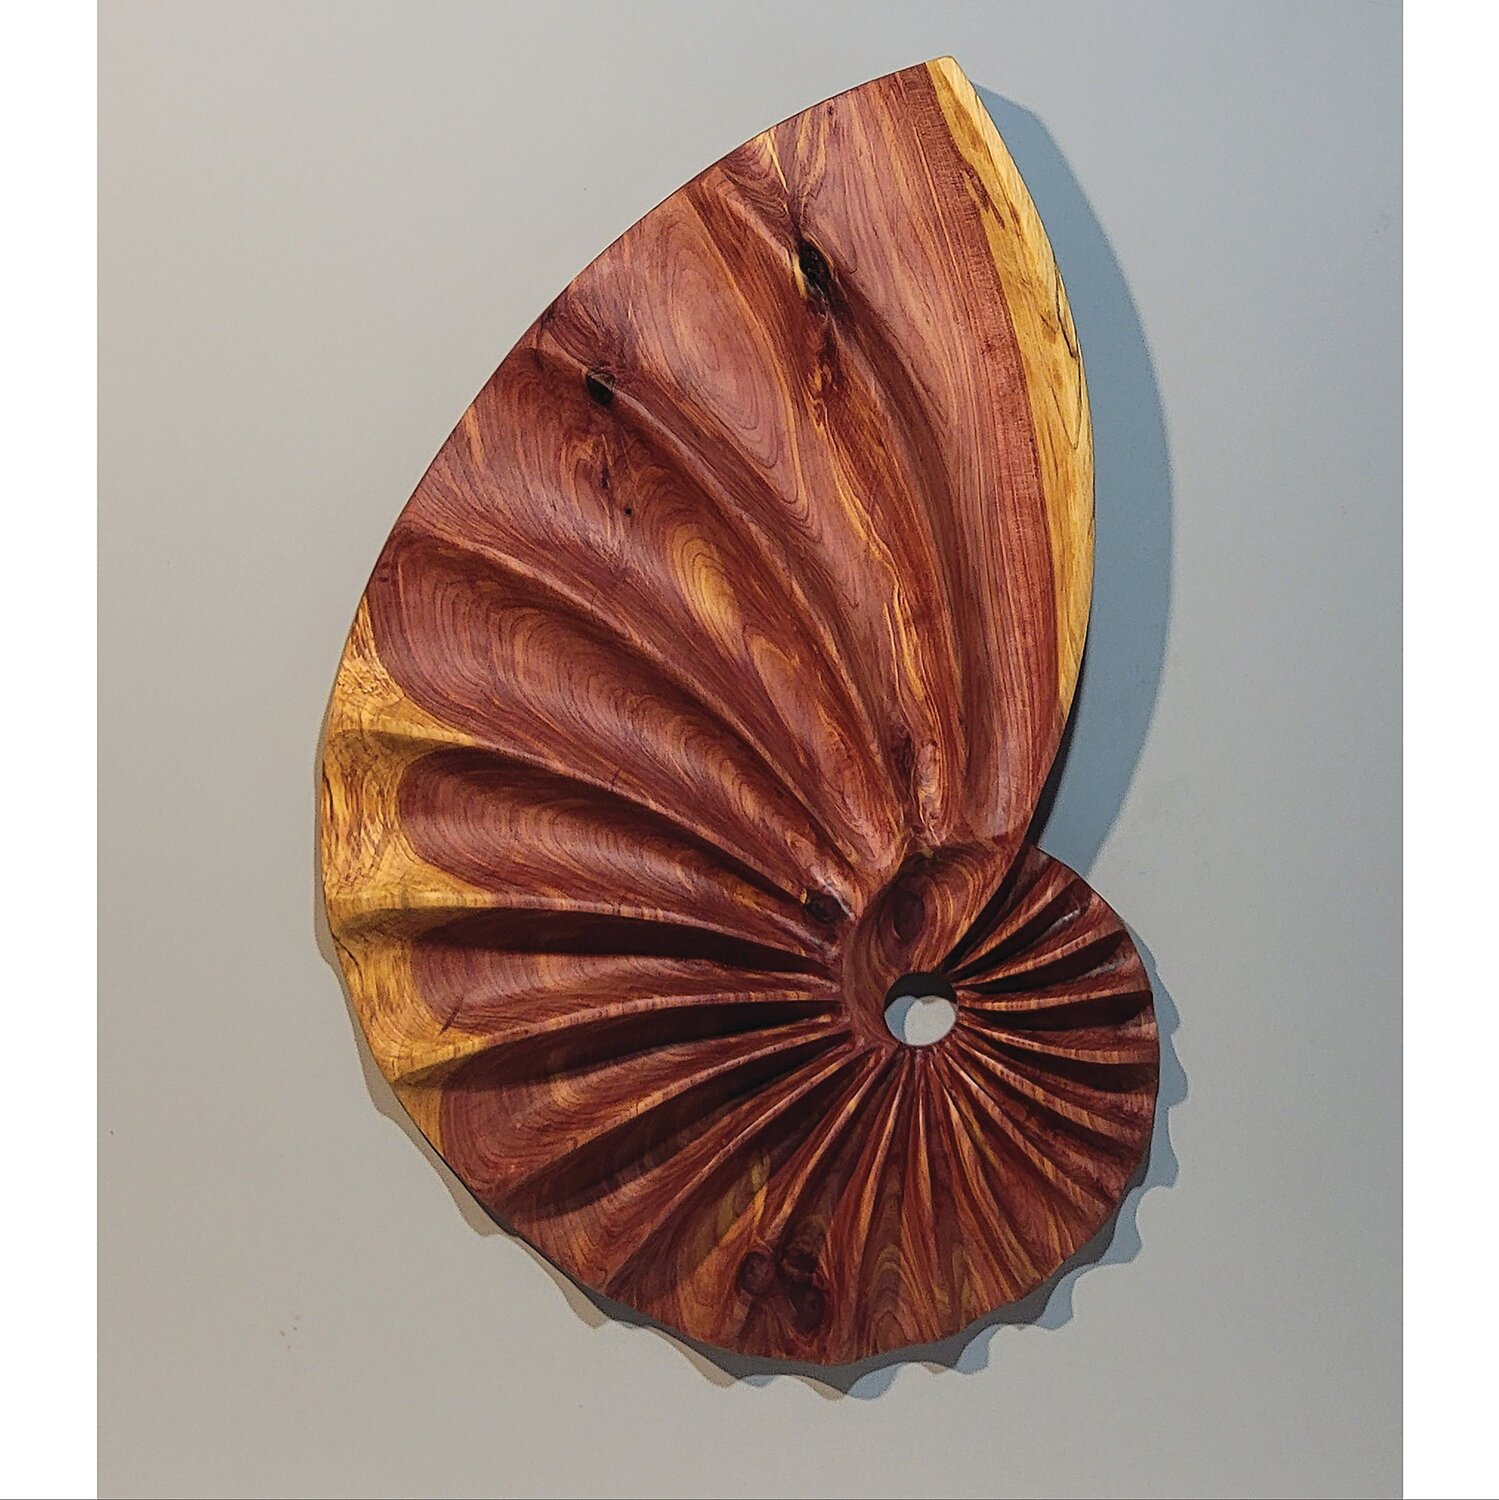 “Cedar Fibonacci Shell” is by Andy DiPetro.